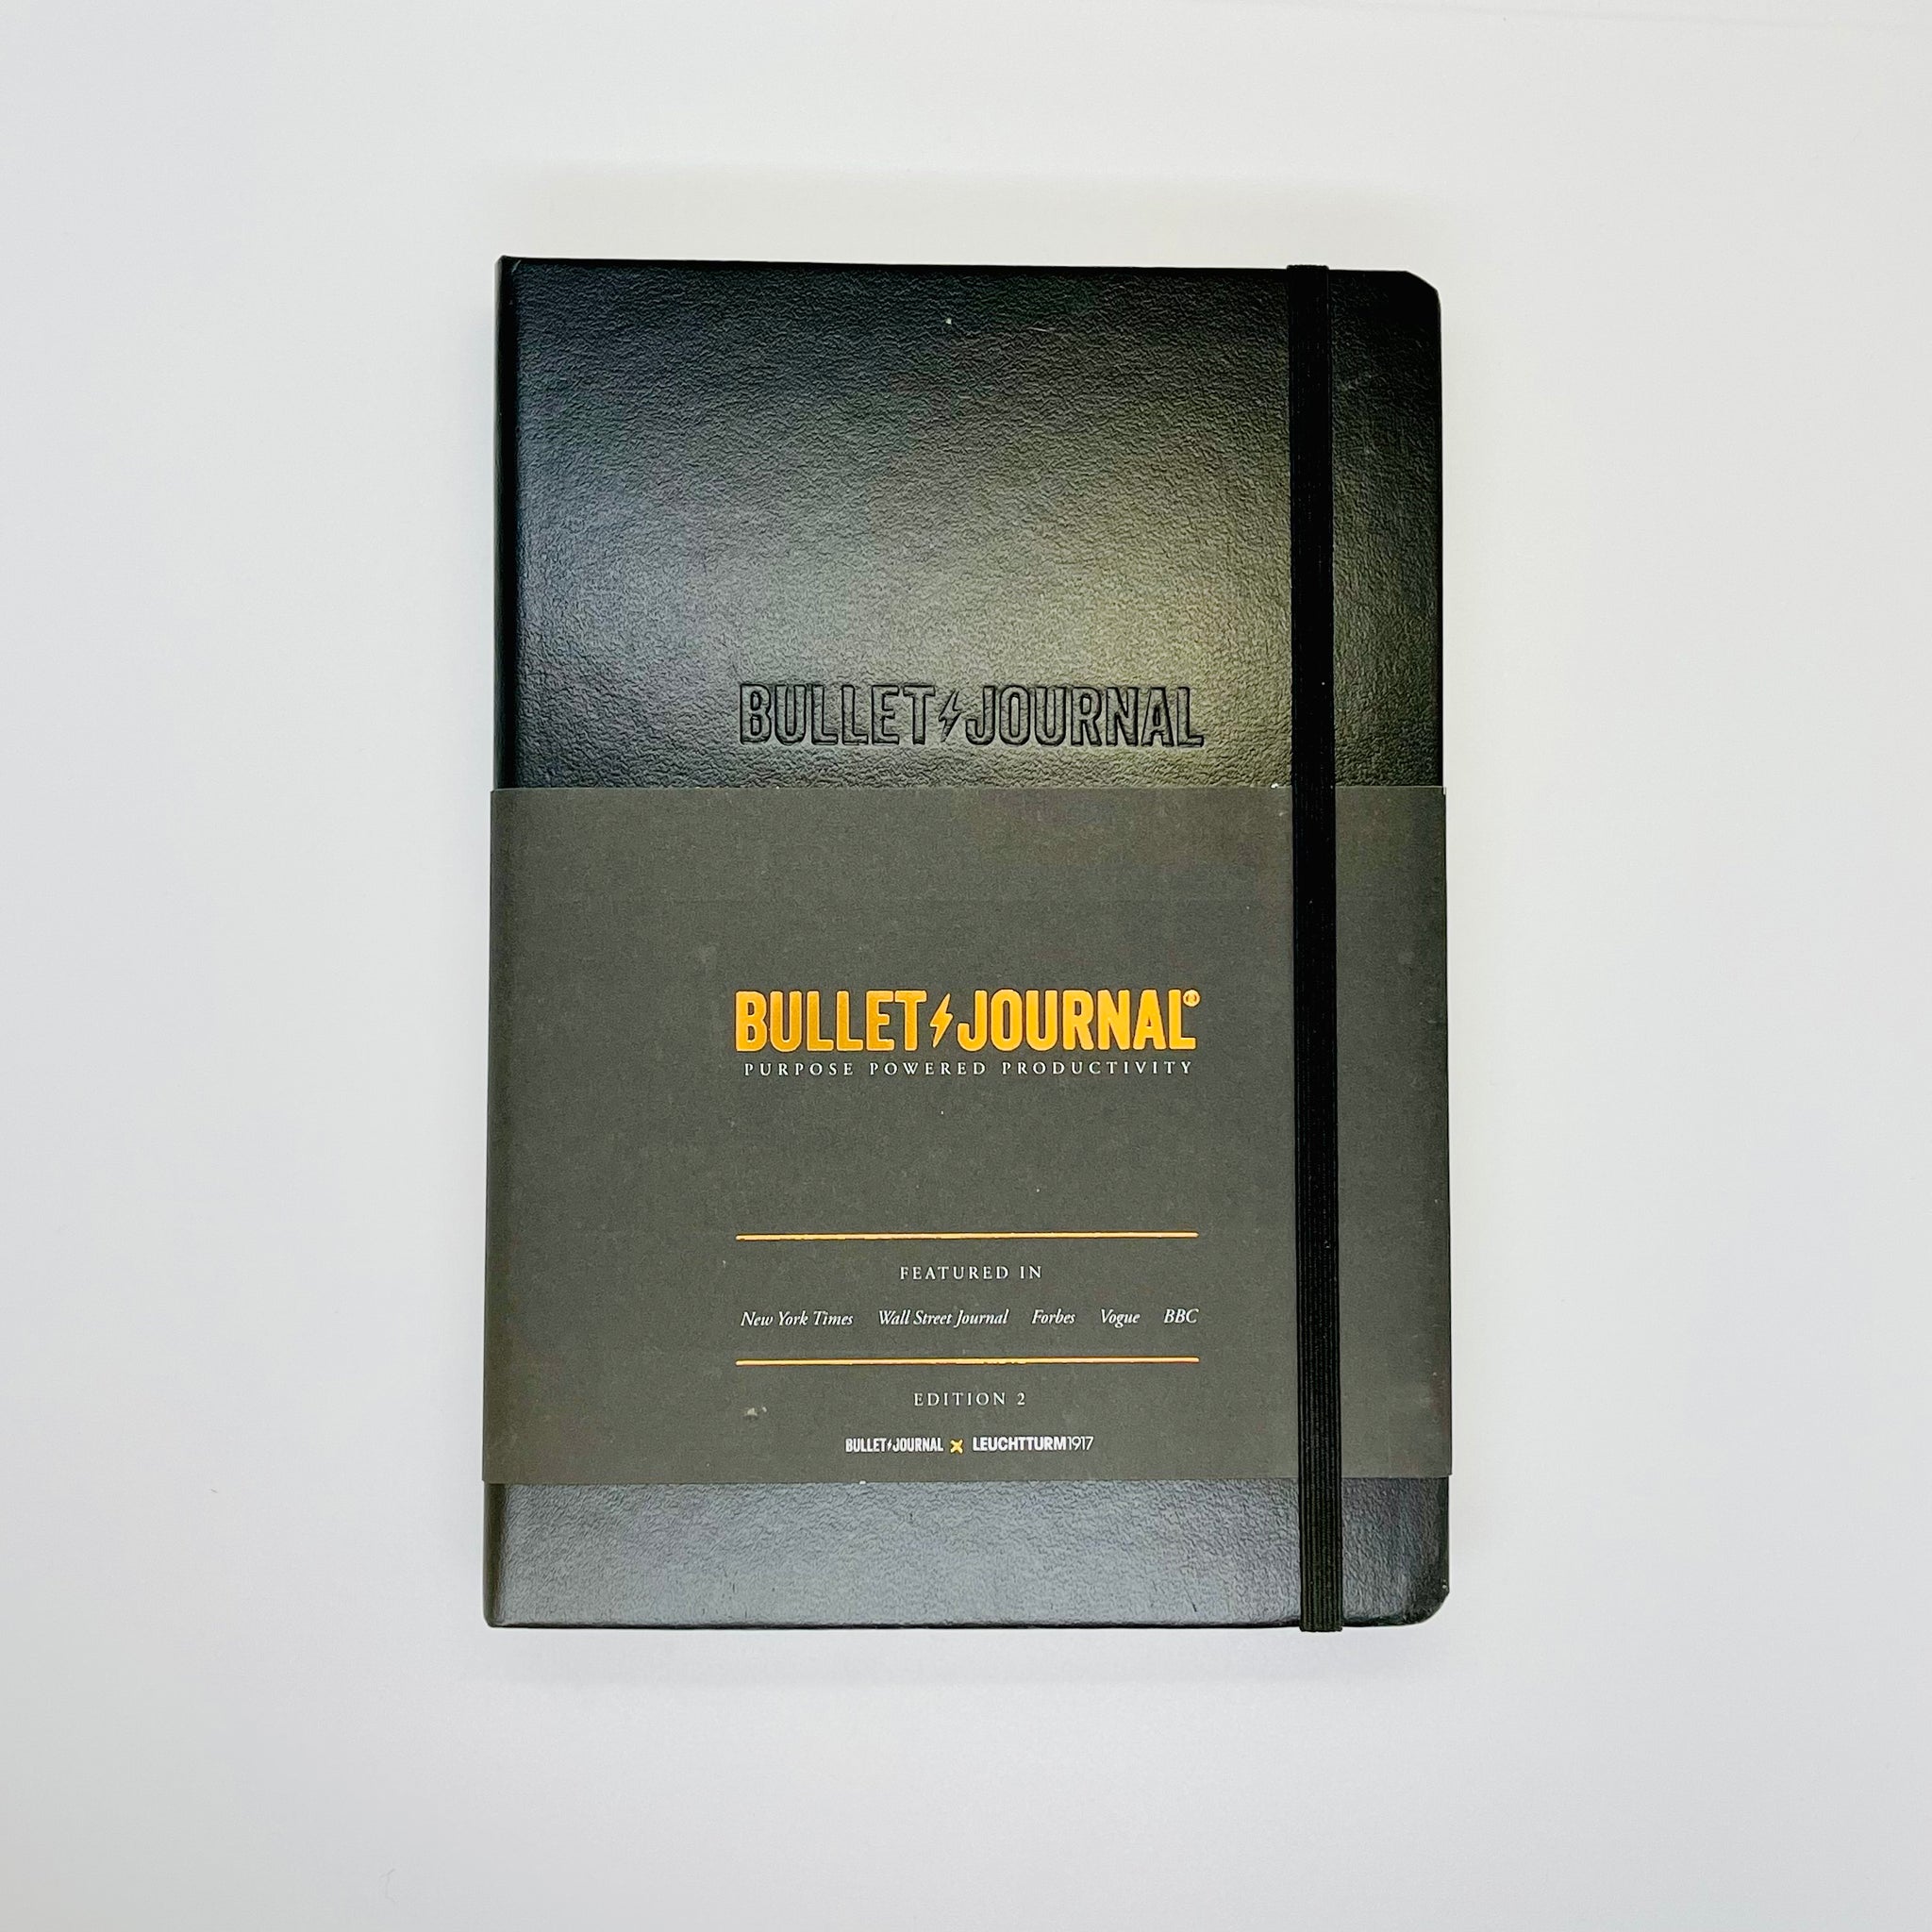 Buy Bullet Journal® – Edition 2 l LEUCHTTURM1917